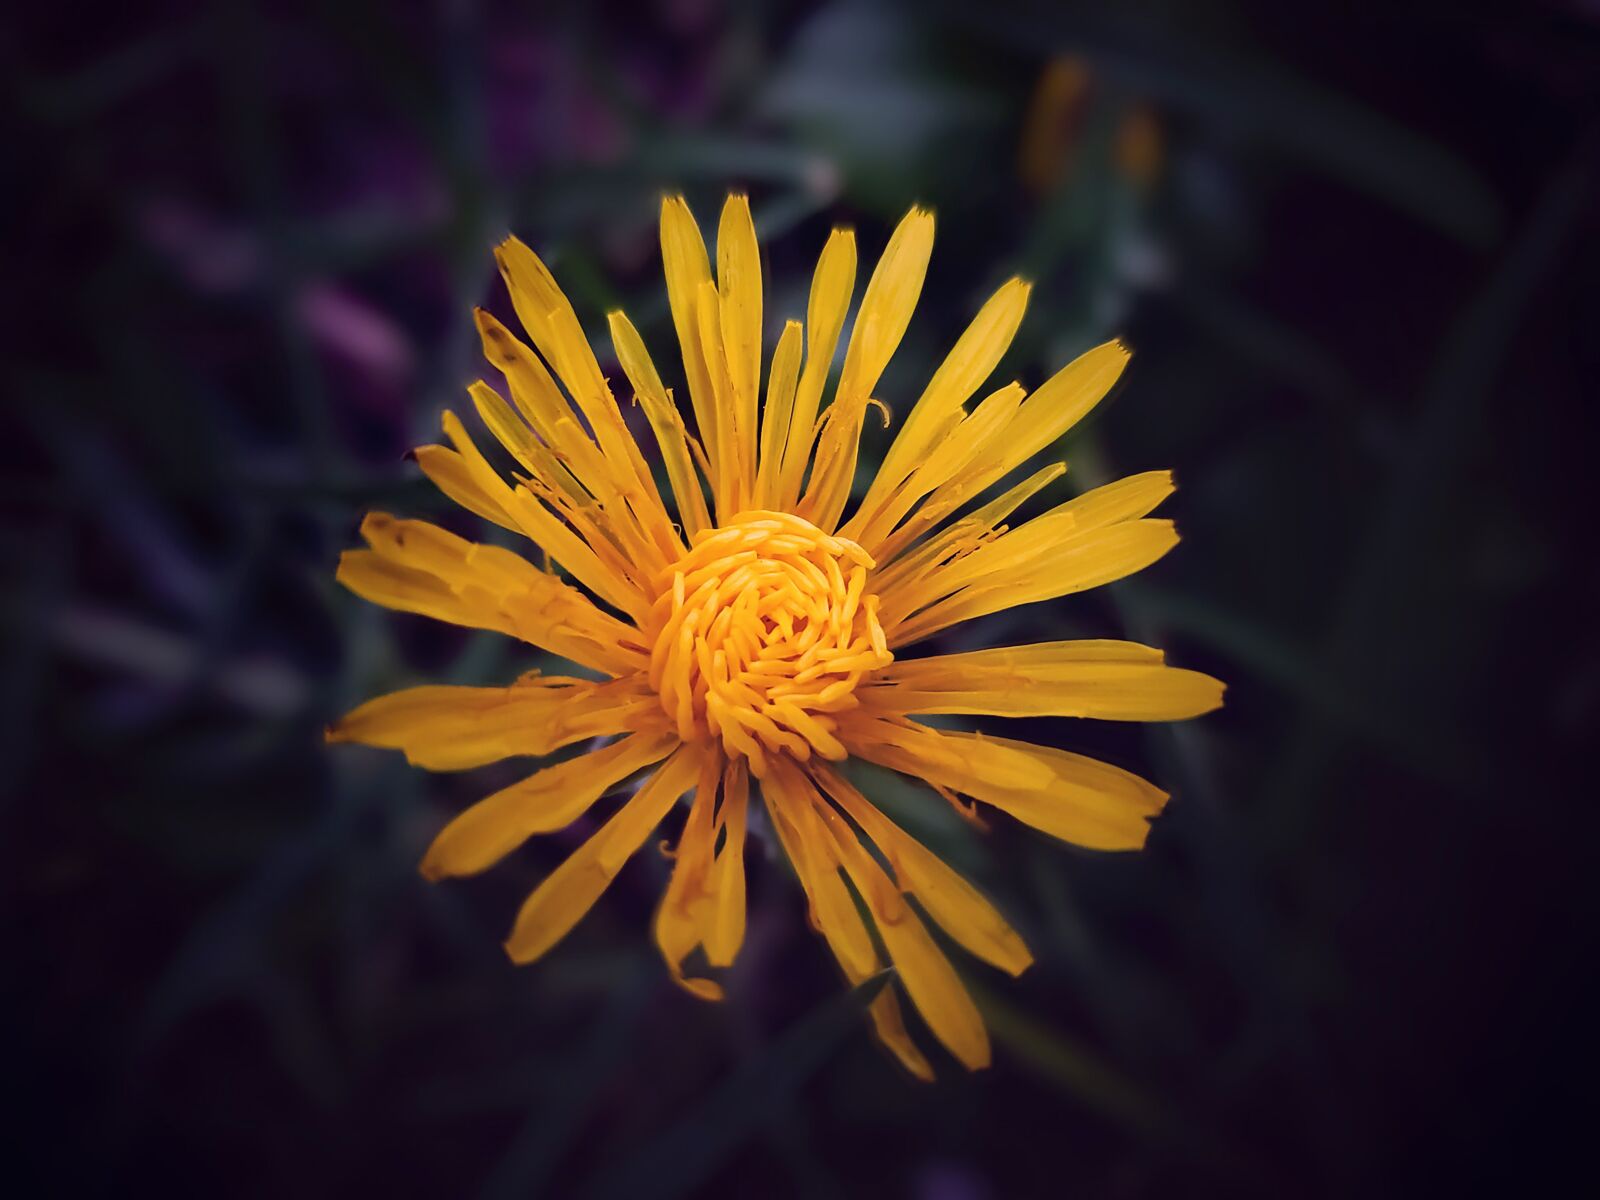 Samsung Galaxy S10+ sample photo. Daisy, flower, nature photography